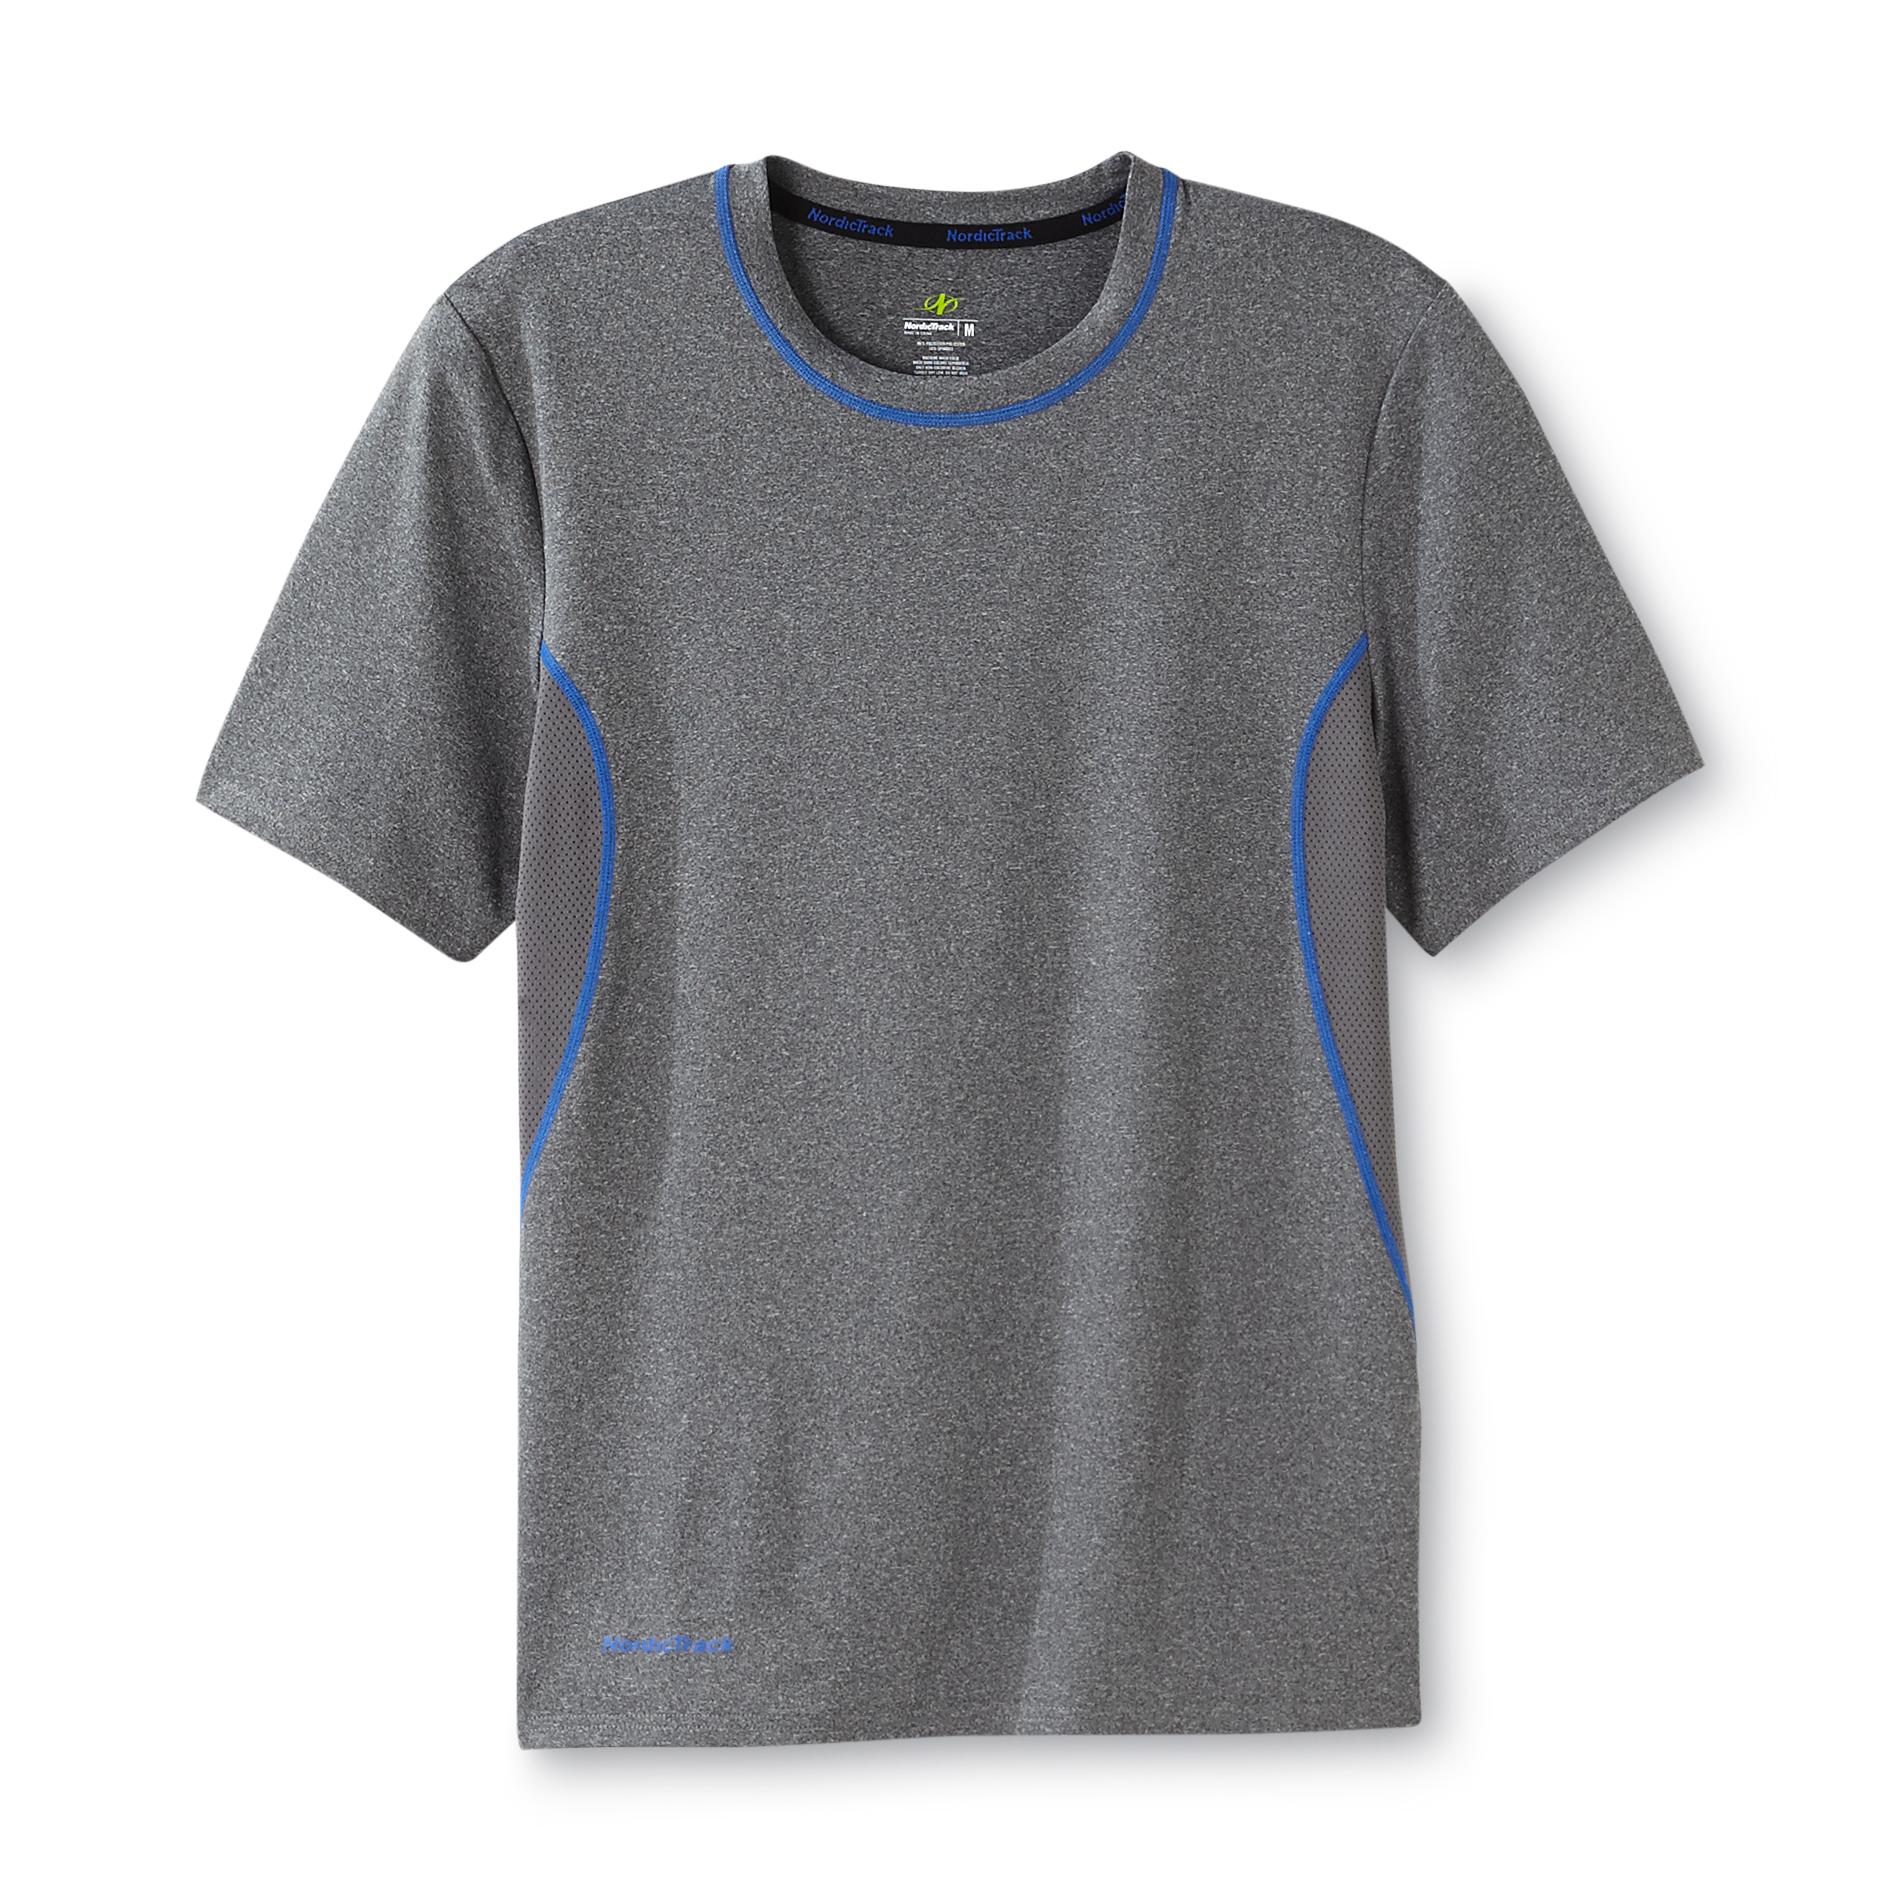 NordicTrack Men's Short-Sleeve Athletic Shirt | Shop Your Way: Online ...